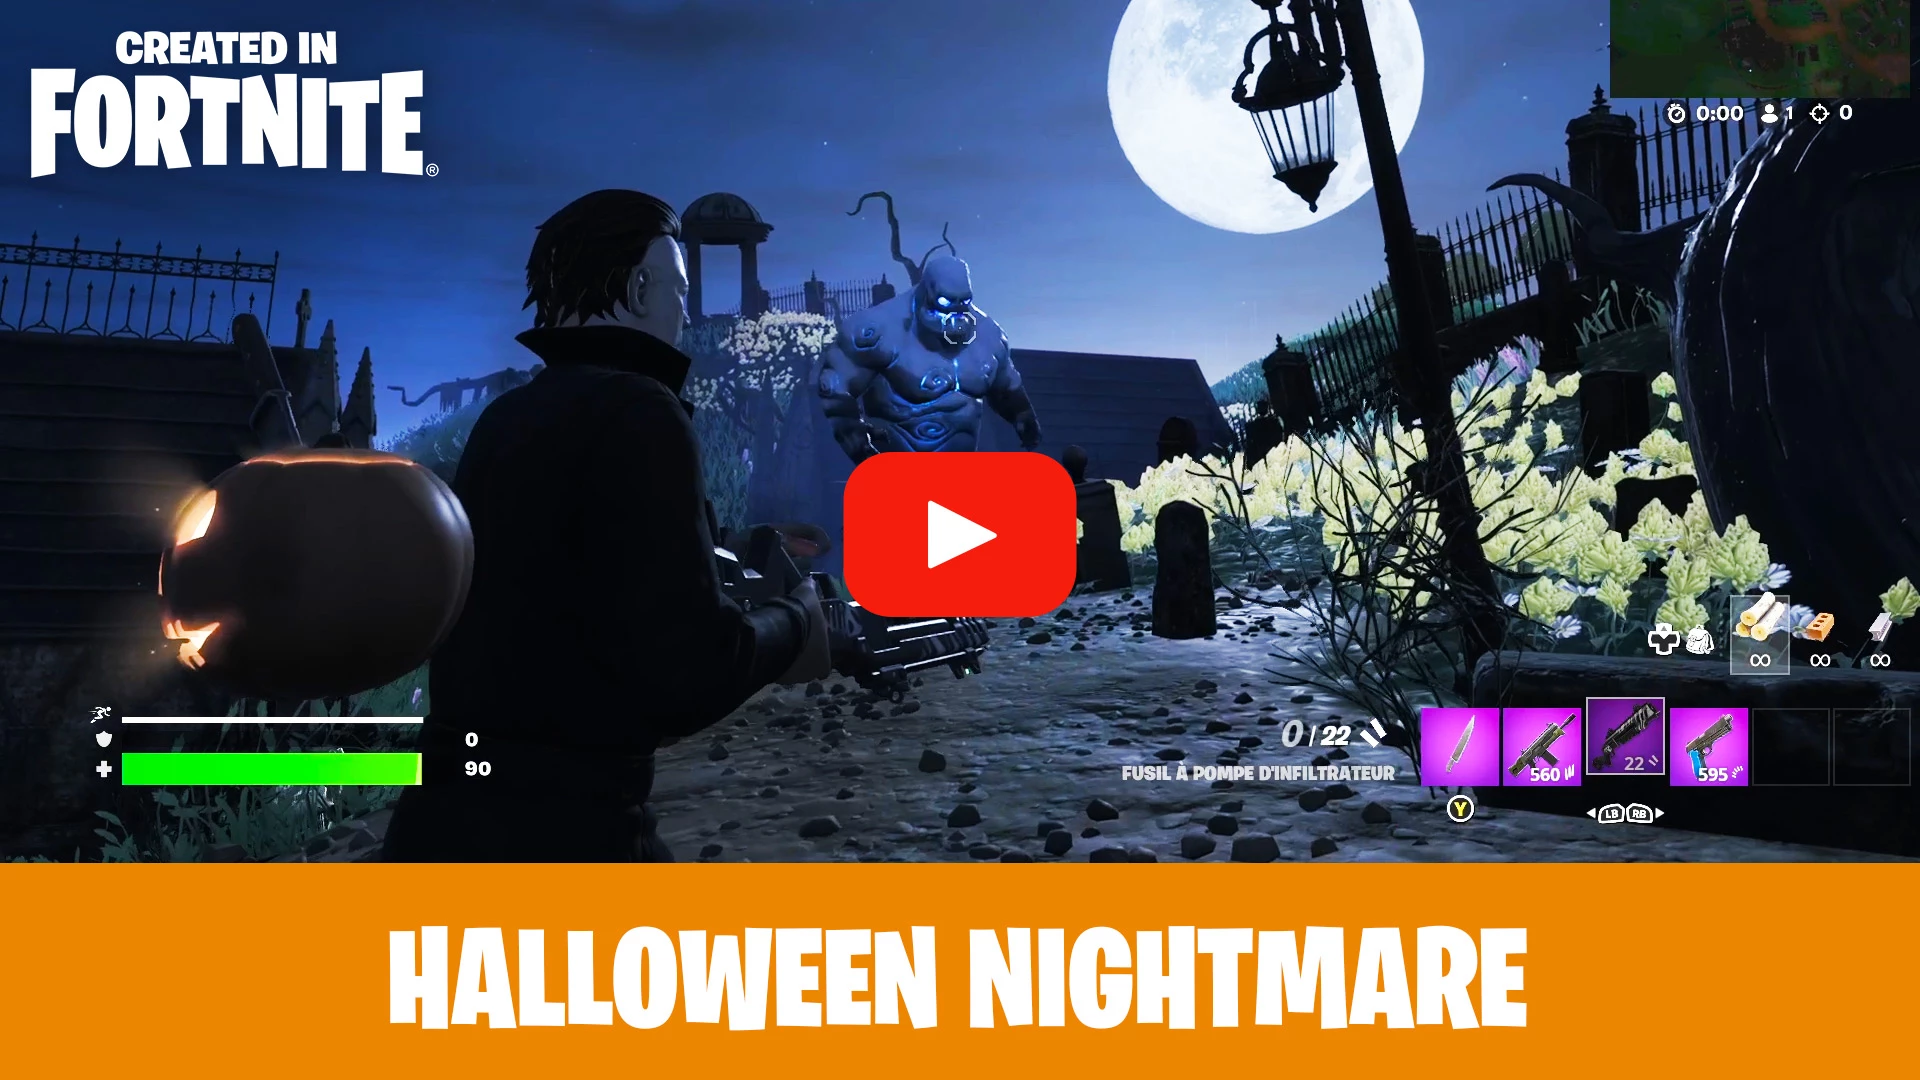 Play on Halloween Nightmare on Fortnite!